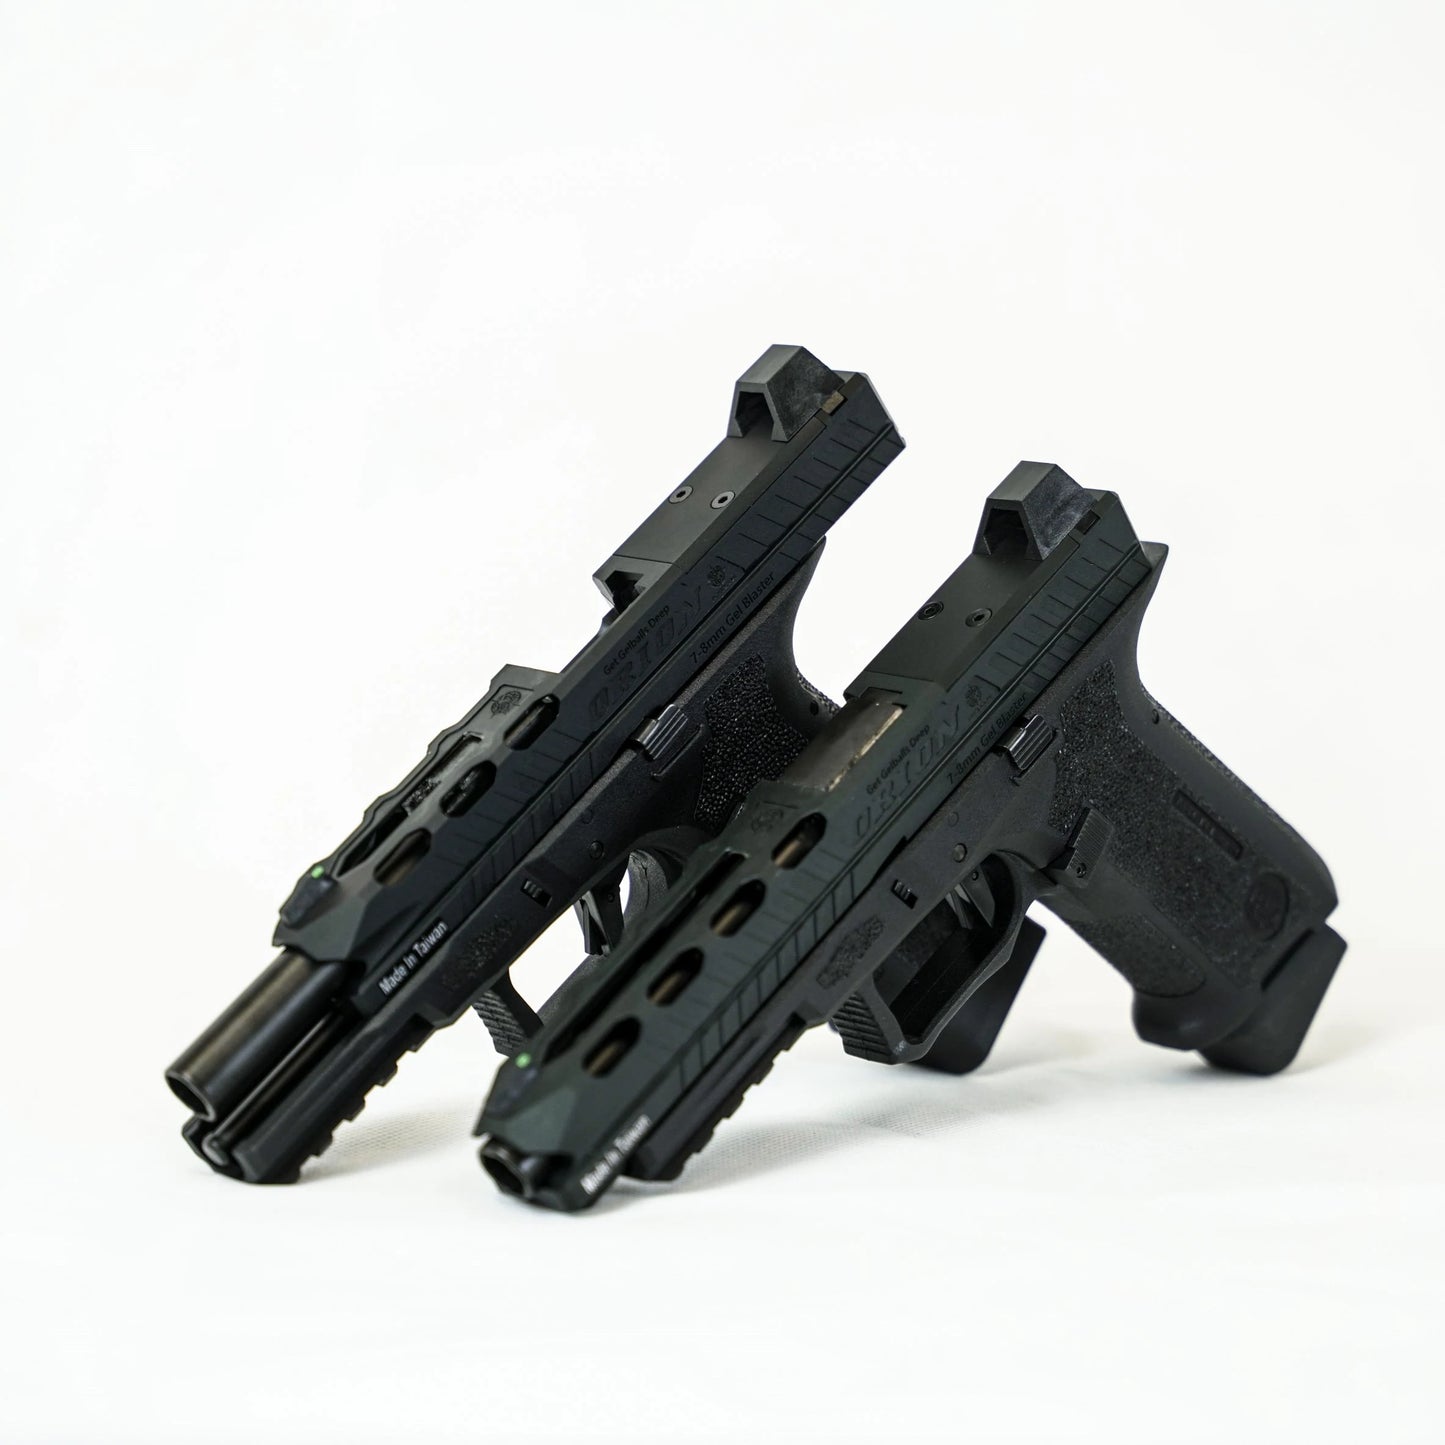 Poseidon/RPM Orion-III Performance GBB Pistol - Gel Blaster Guns, Pistols, Handguns, Rifles For Sale